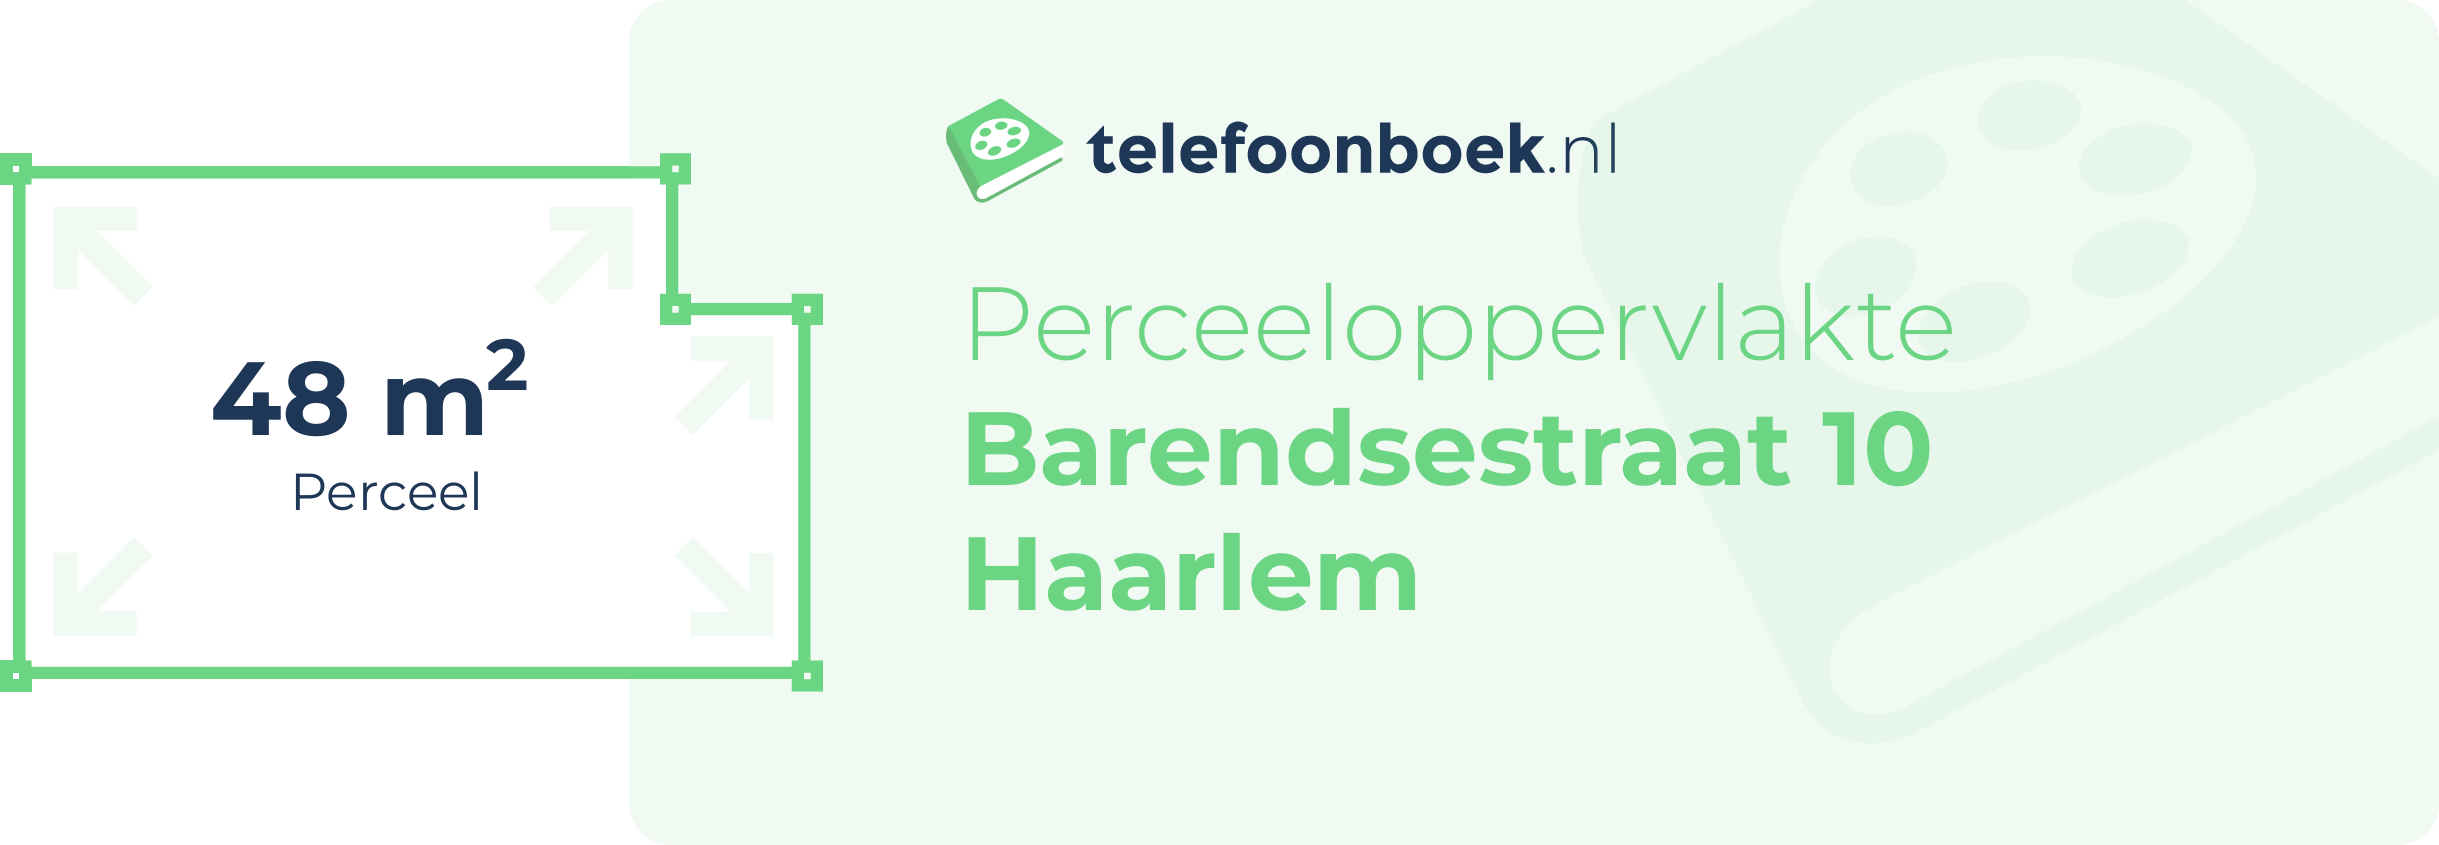 Perceeloppervlakte Barendsestraat 10 Haarlem